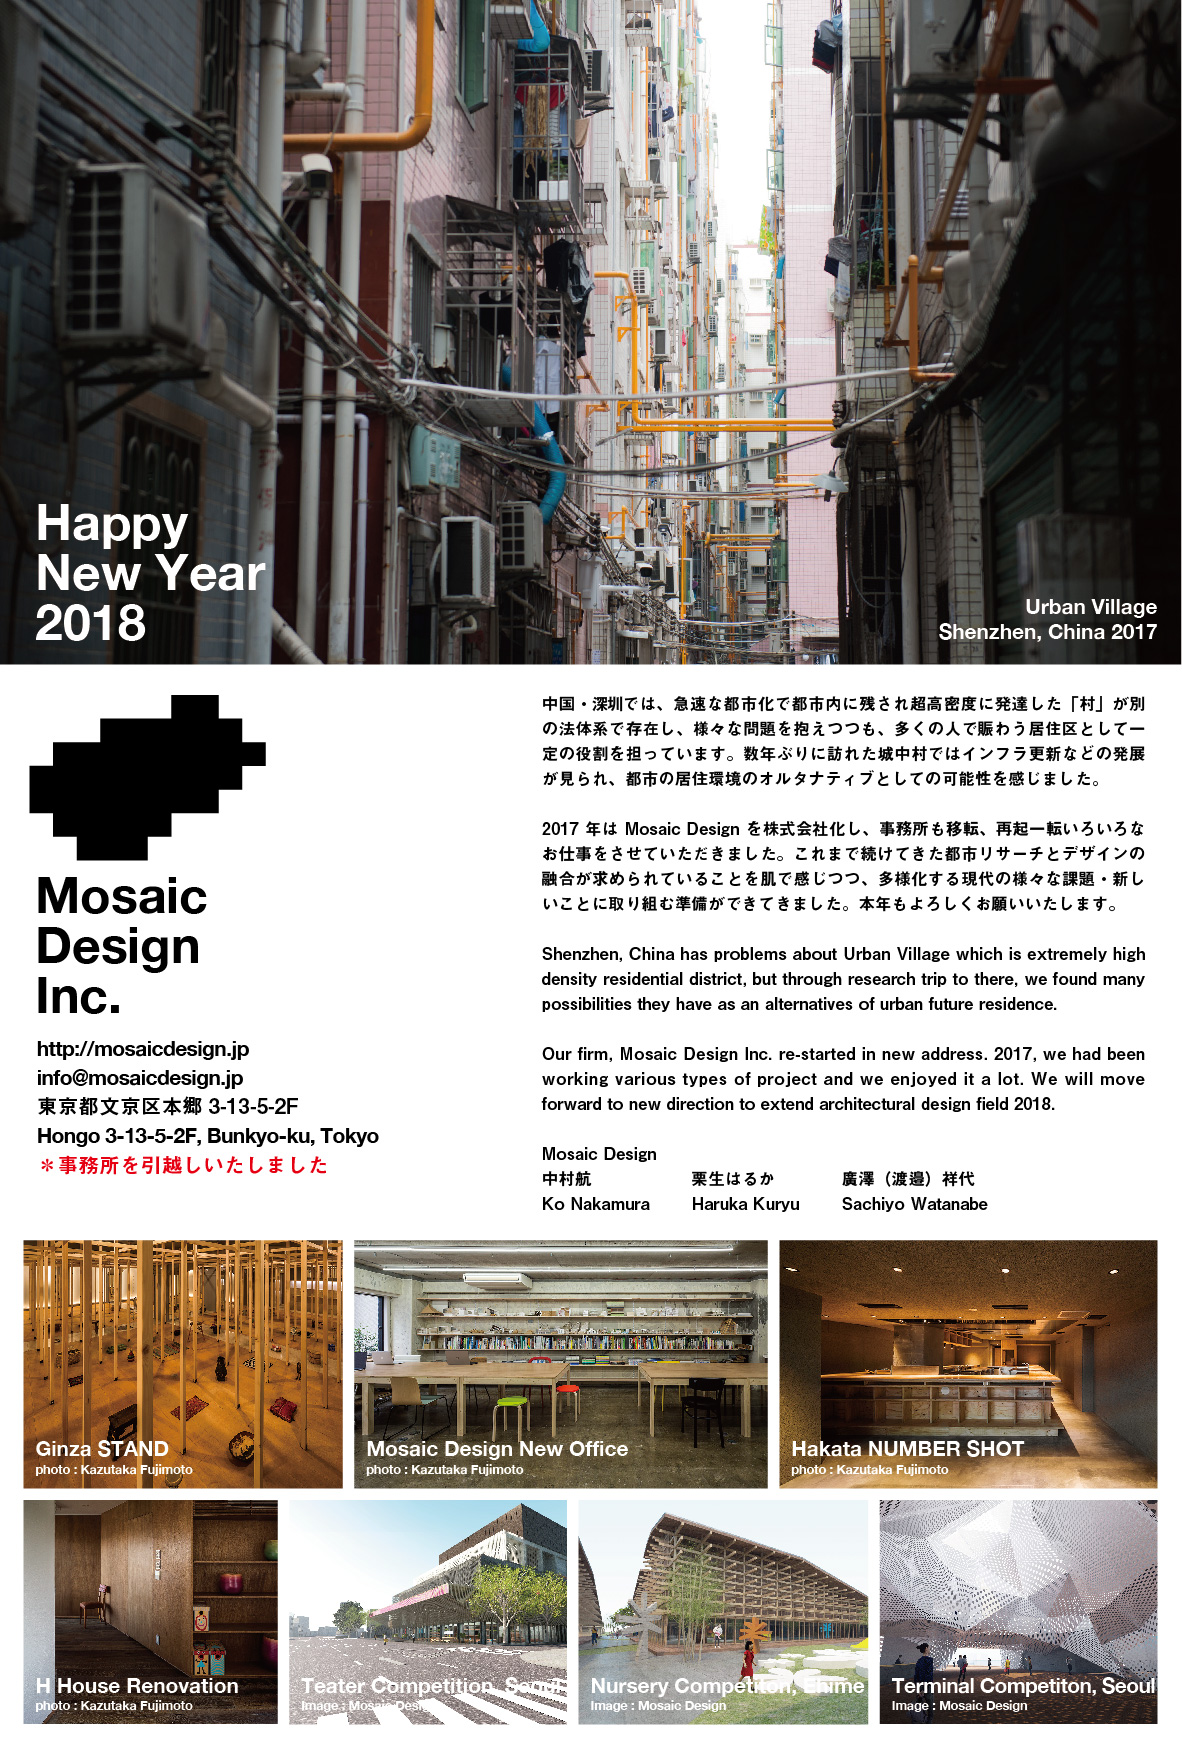 2018_New Year Greeting_Mosaic Design